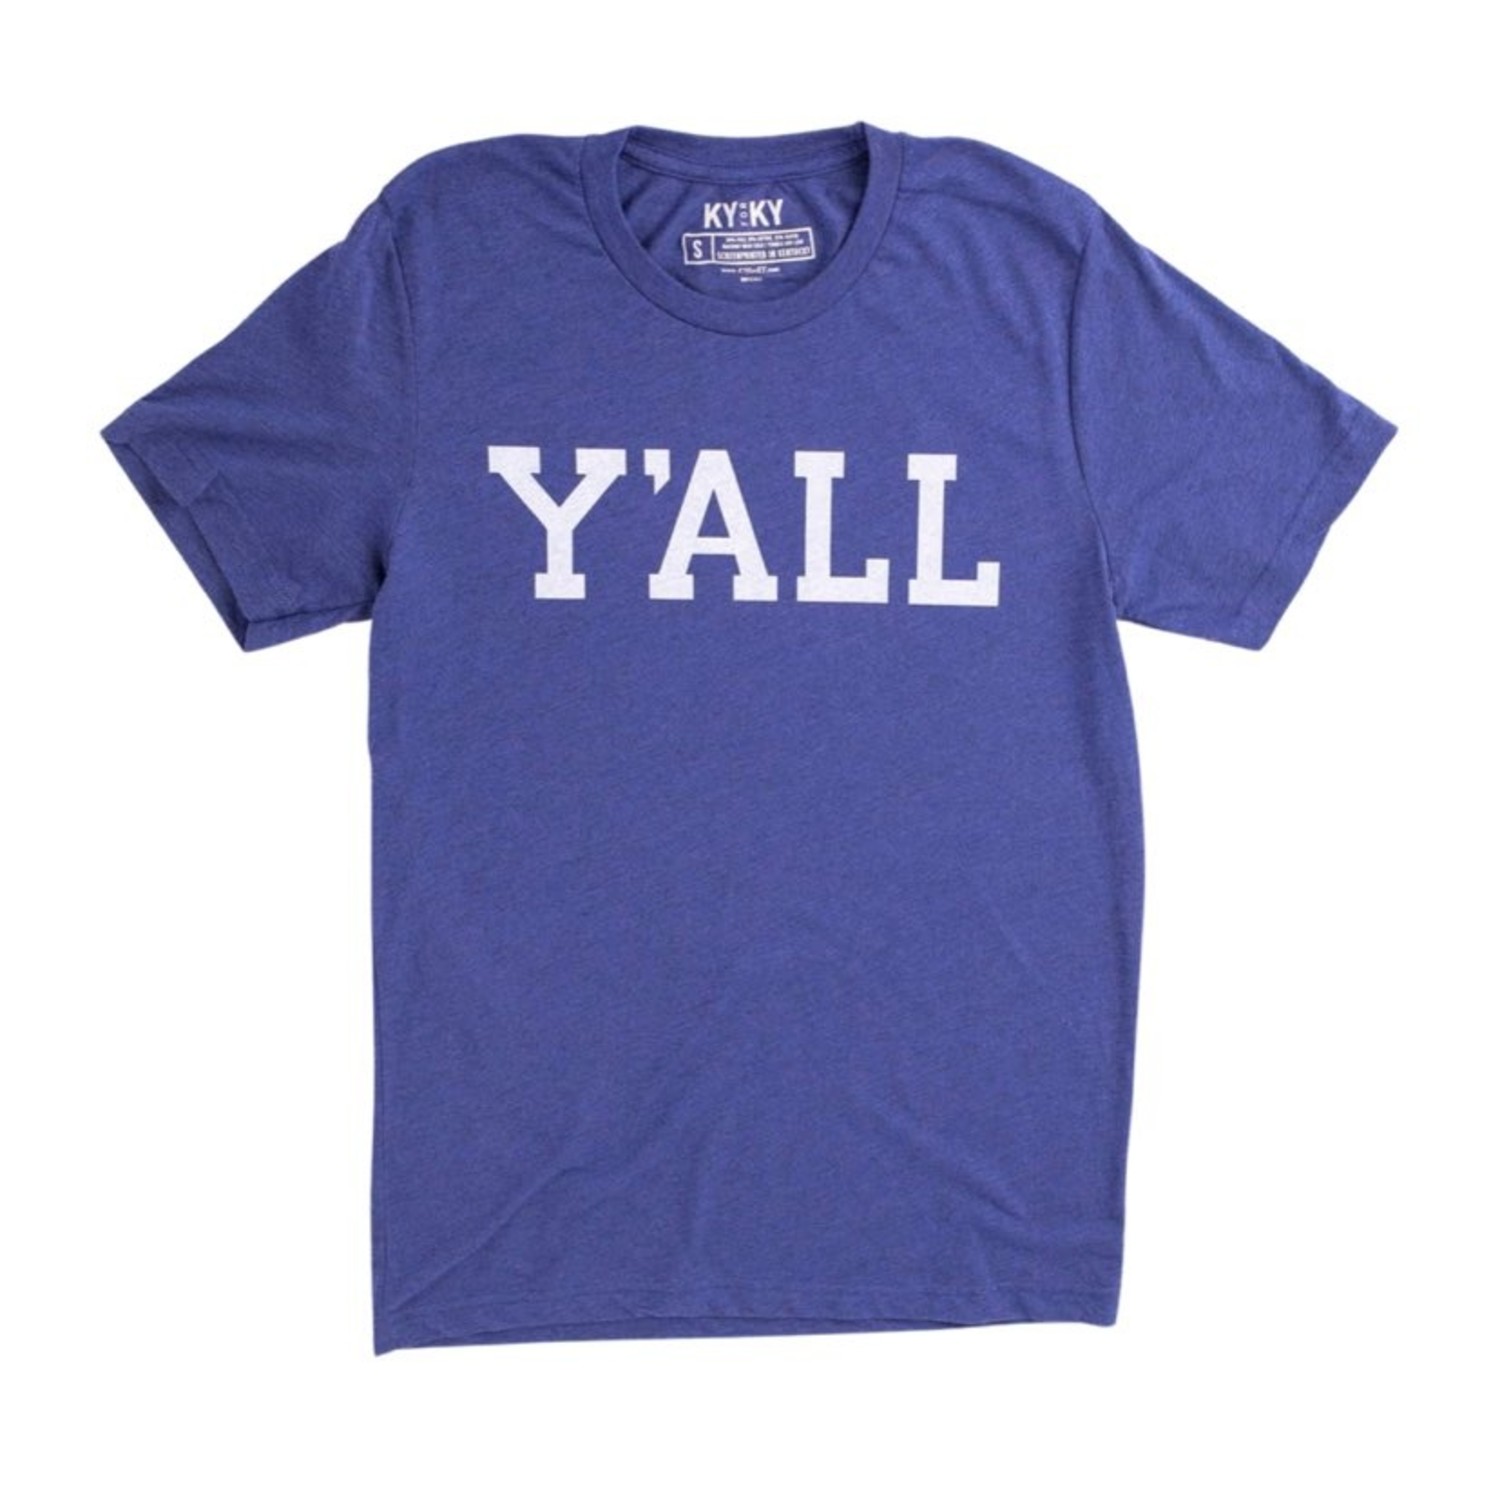 Florence Y'alls Jr. Adult Sizes T-shirts